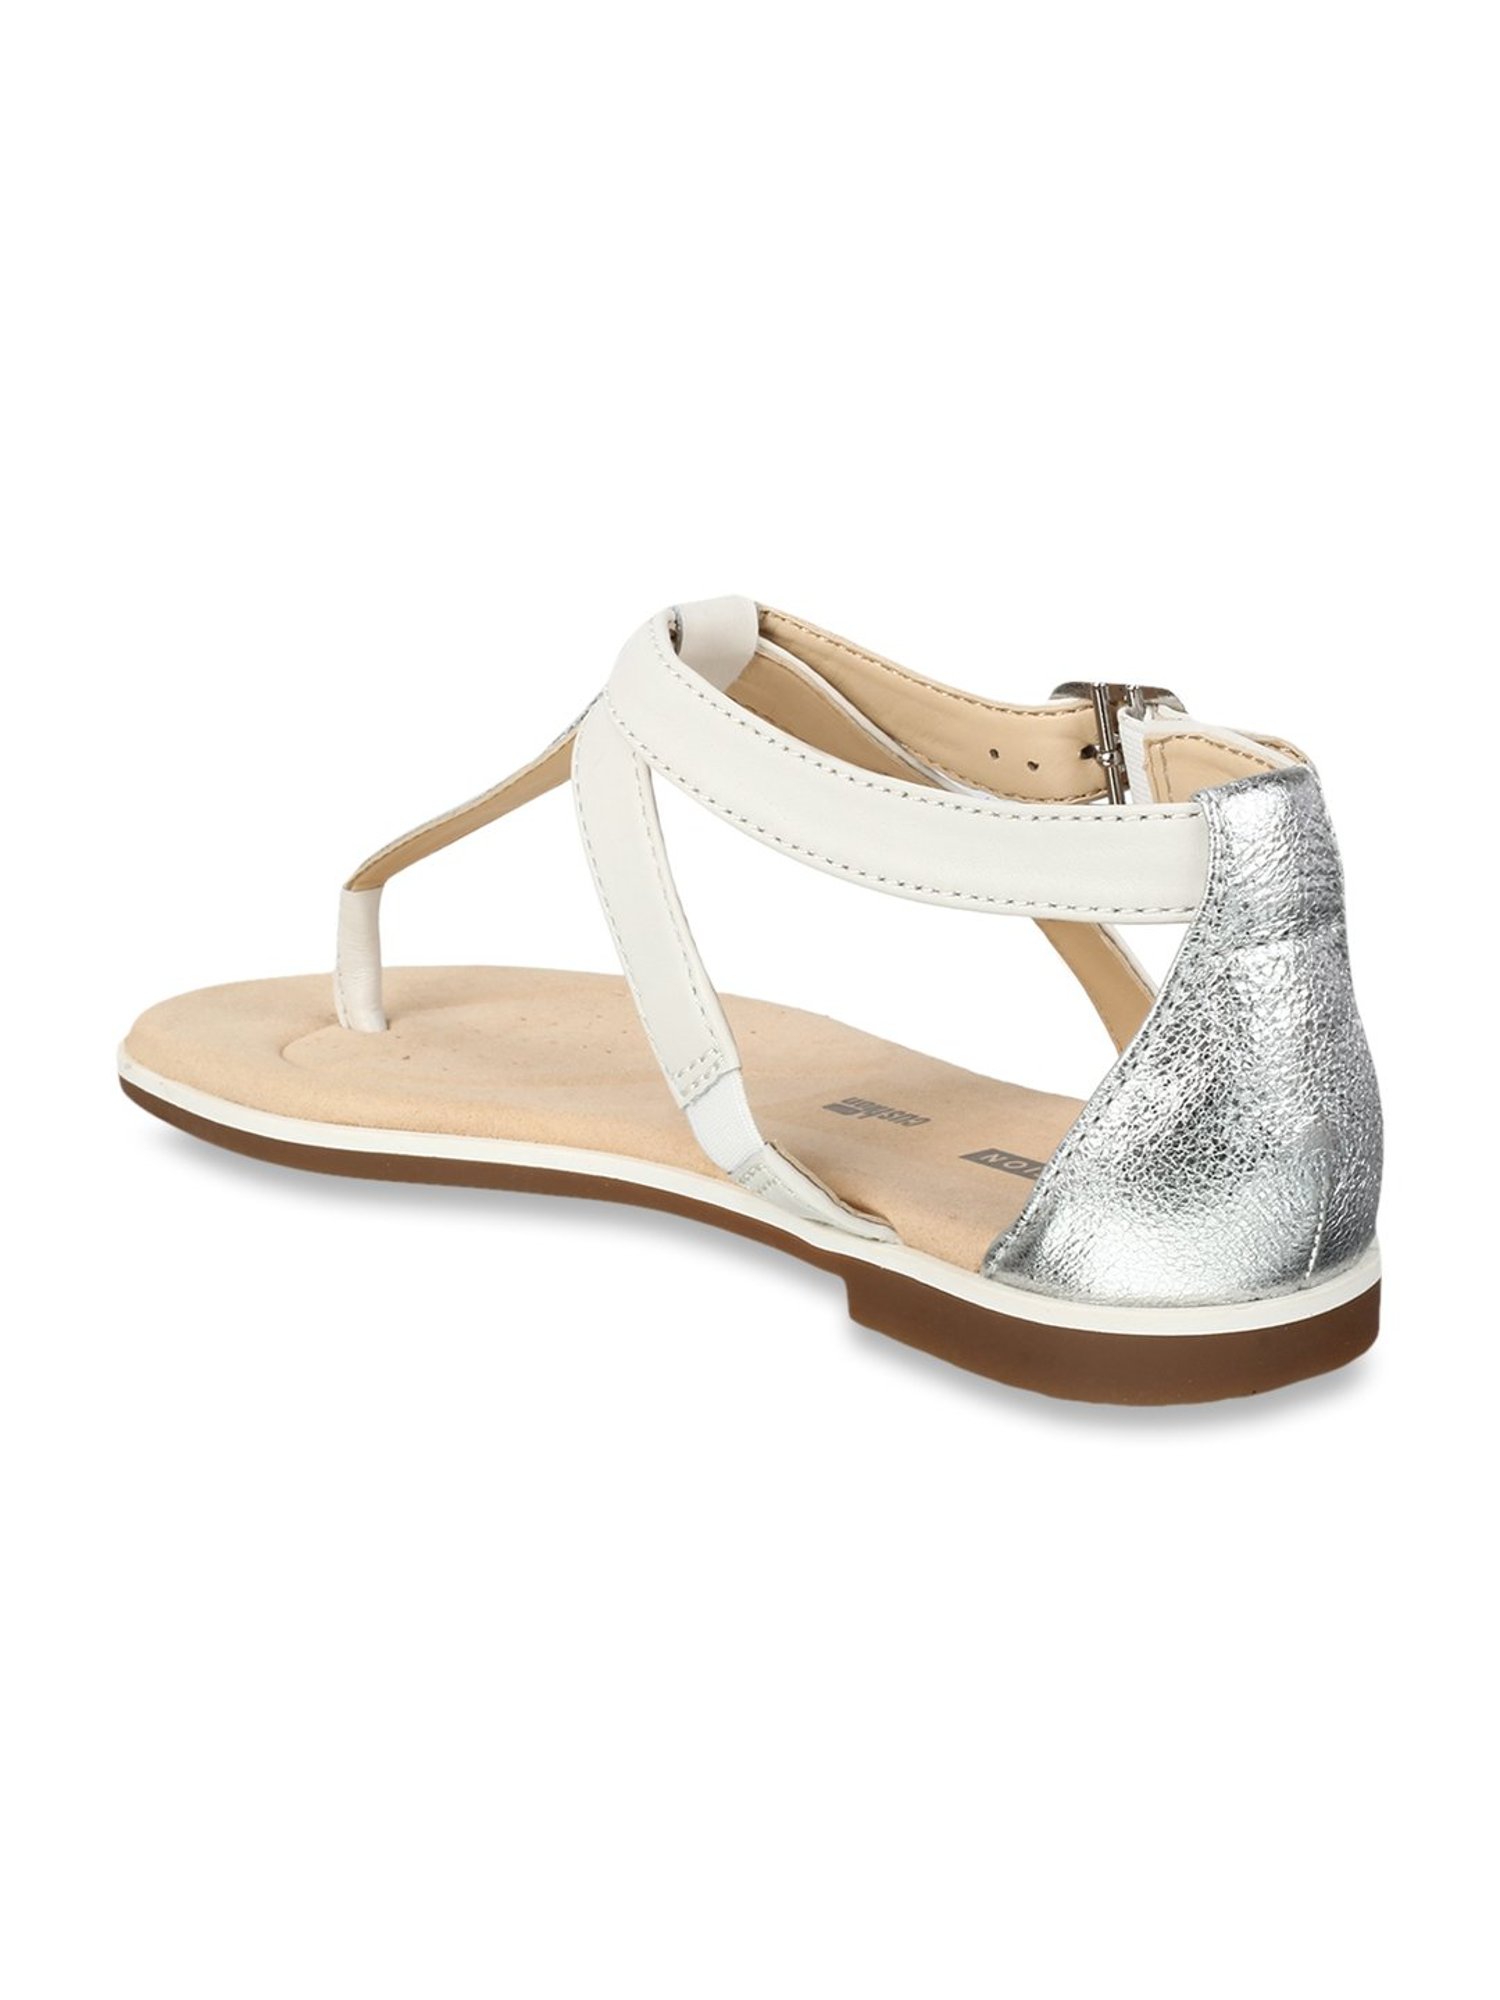 Clarks Women's Leisa Spice Sandal White | Mar-Lou Shoes